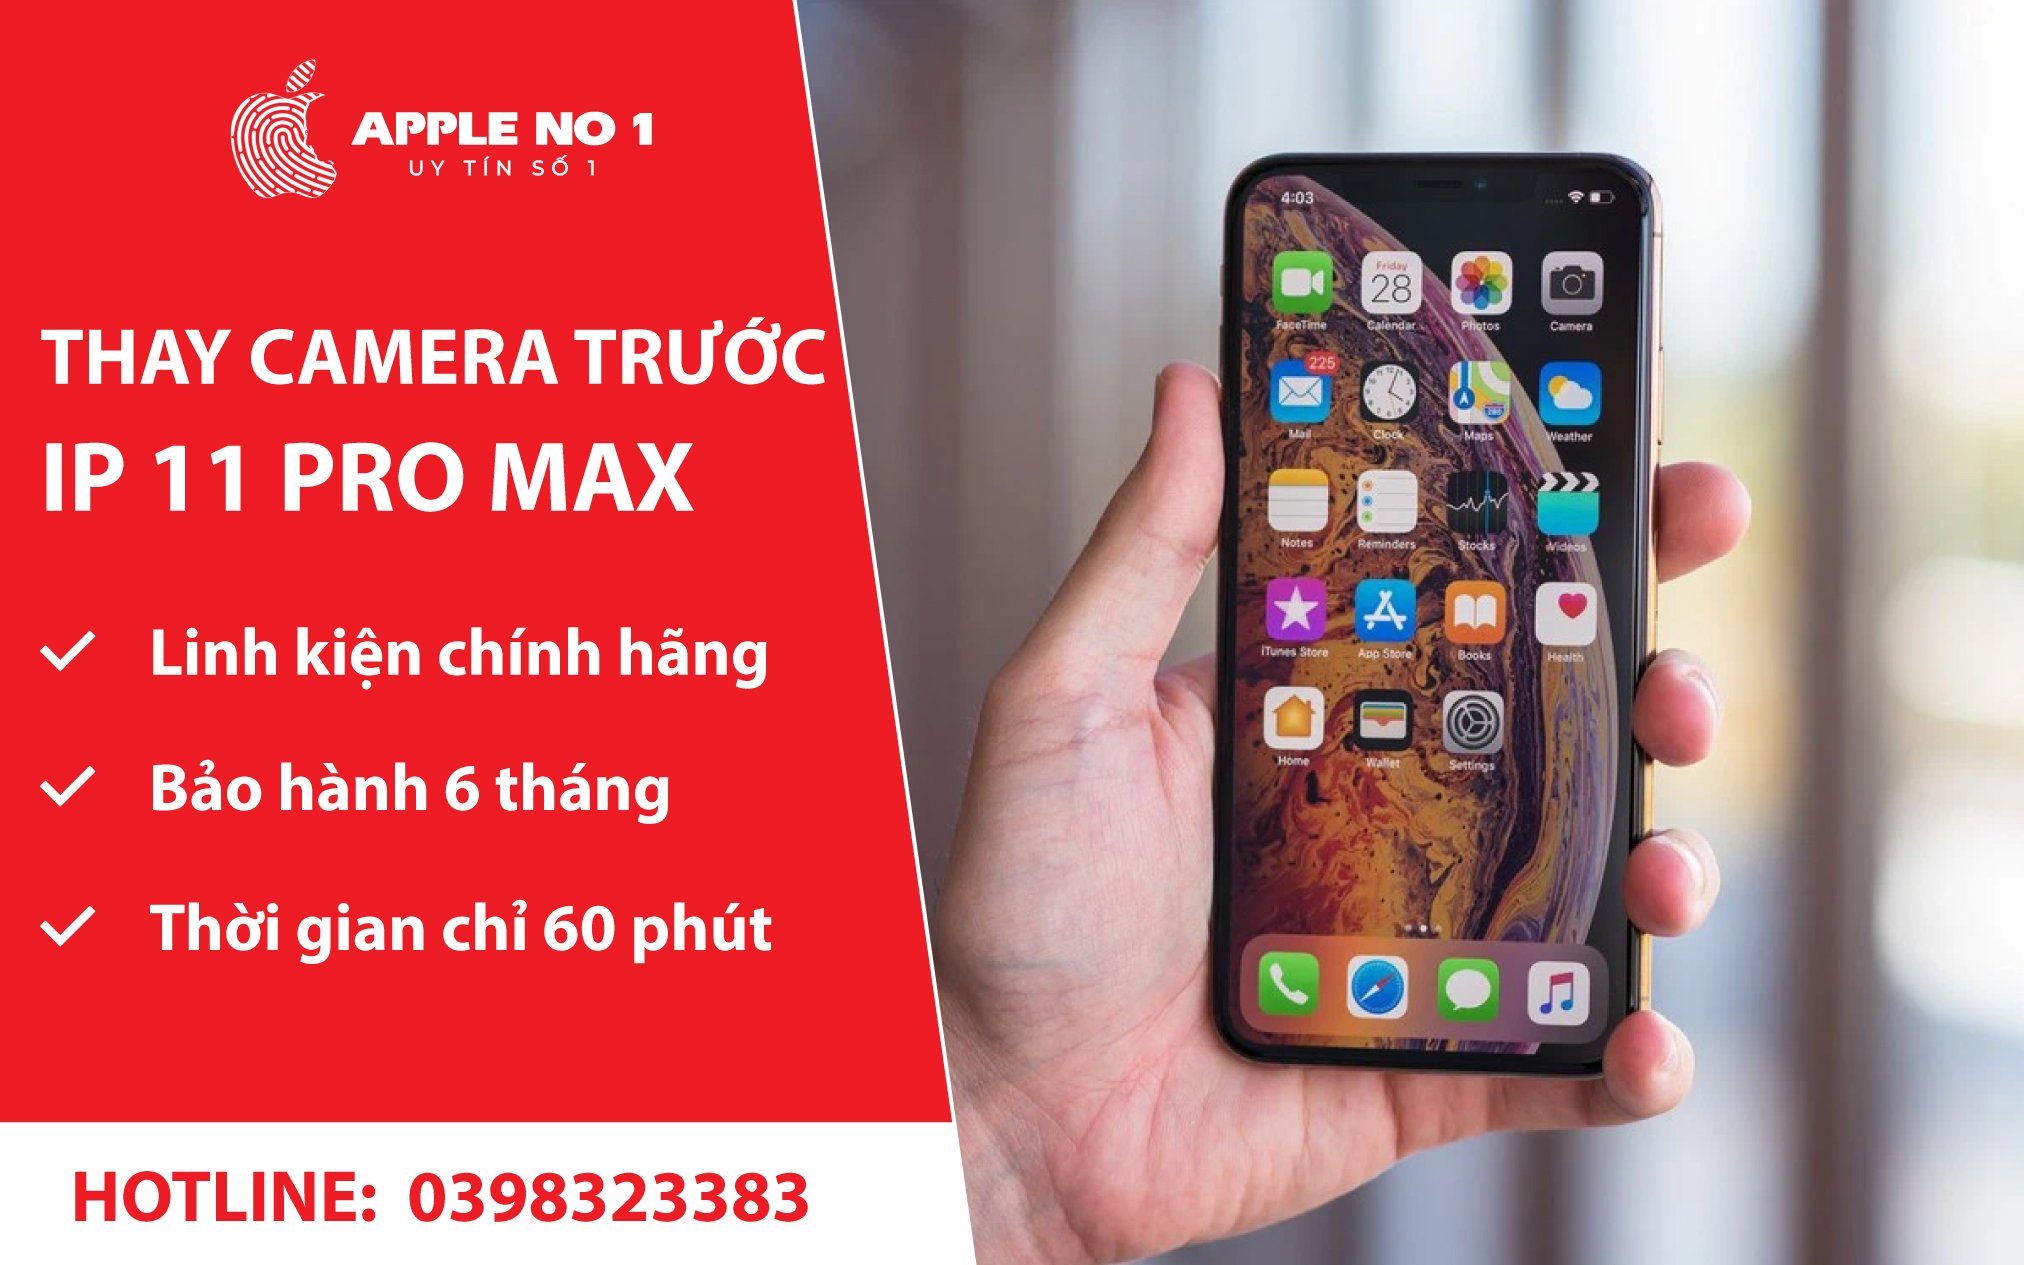 thay camera truoc iphone 11 pro max uy tin, chat luong tai apple no.1